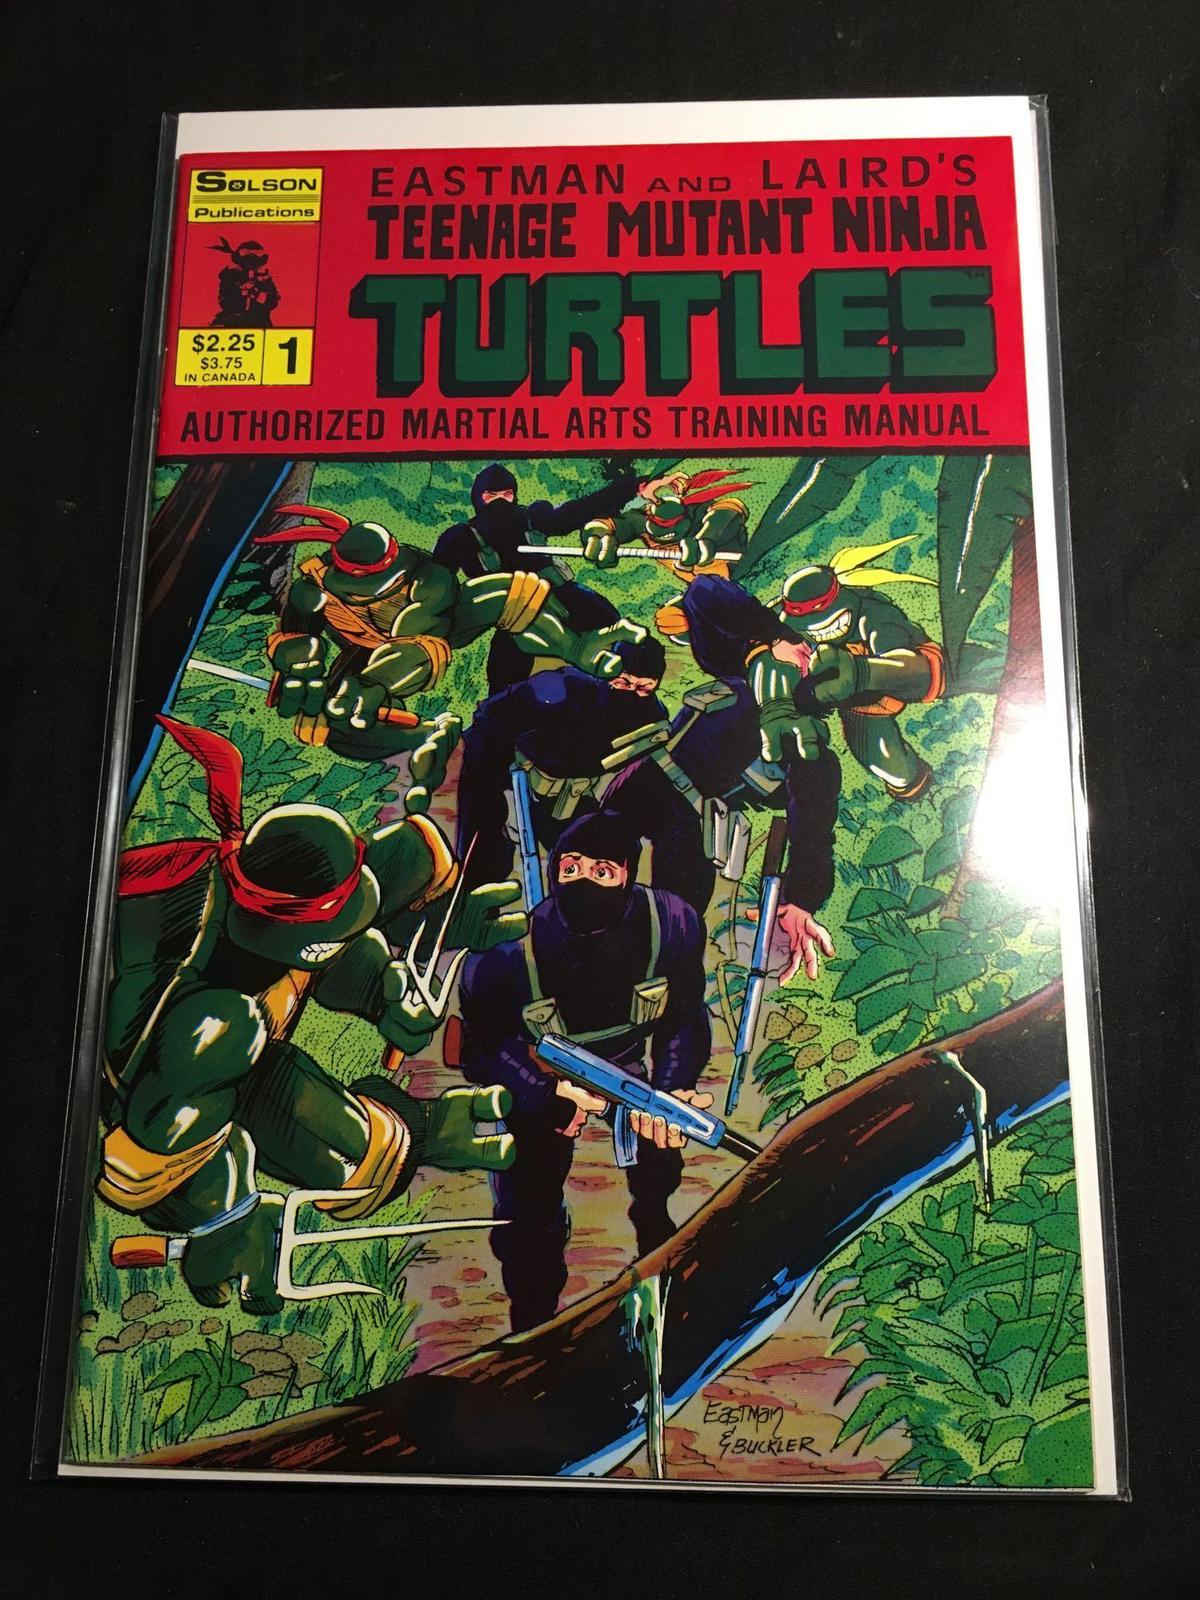 Solson Publications, Eastman And Laird's Teenage Mutant Ninja Turtles #1-Comic Book